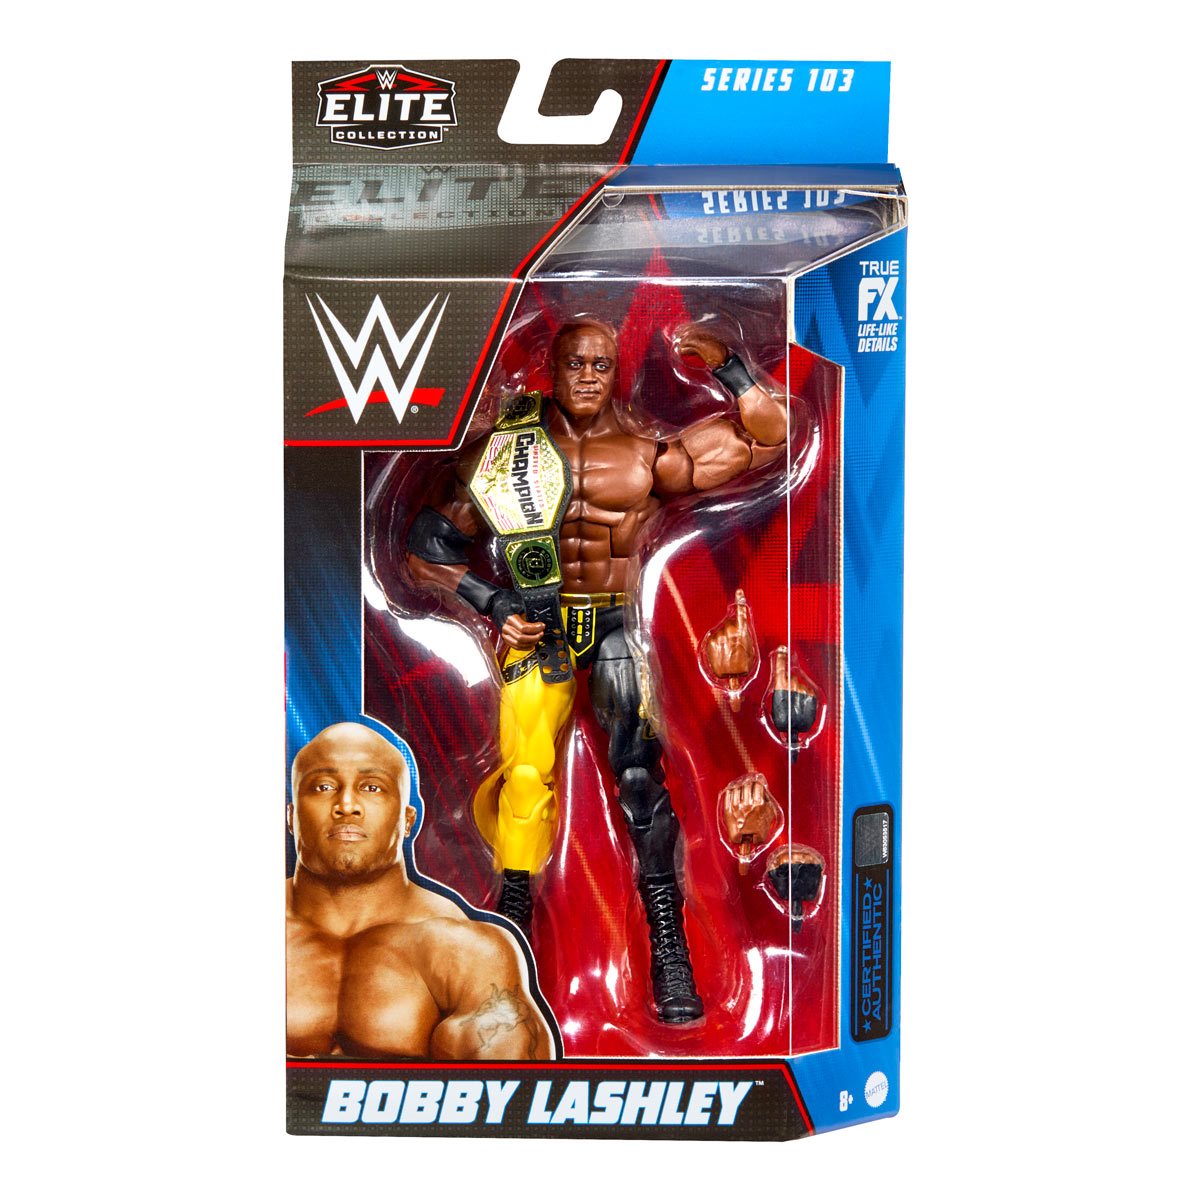 WWE Elite Collection Series 103: Bobby Lashley